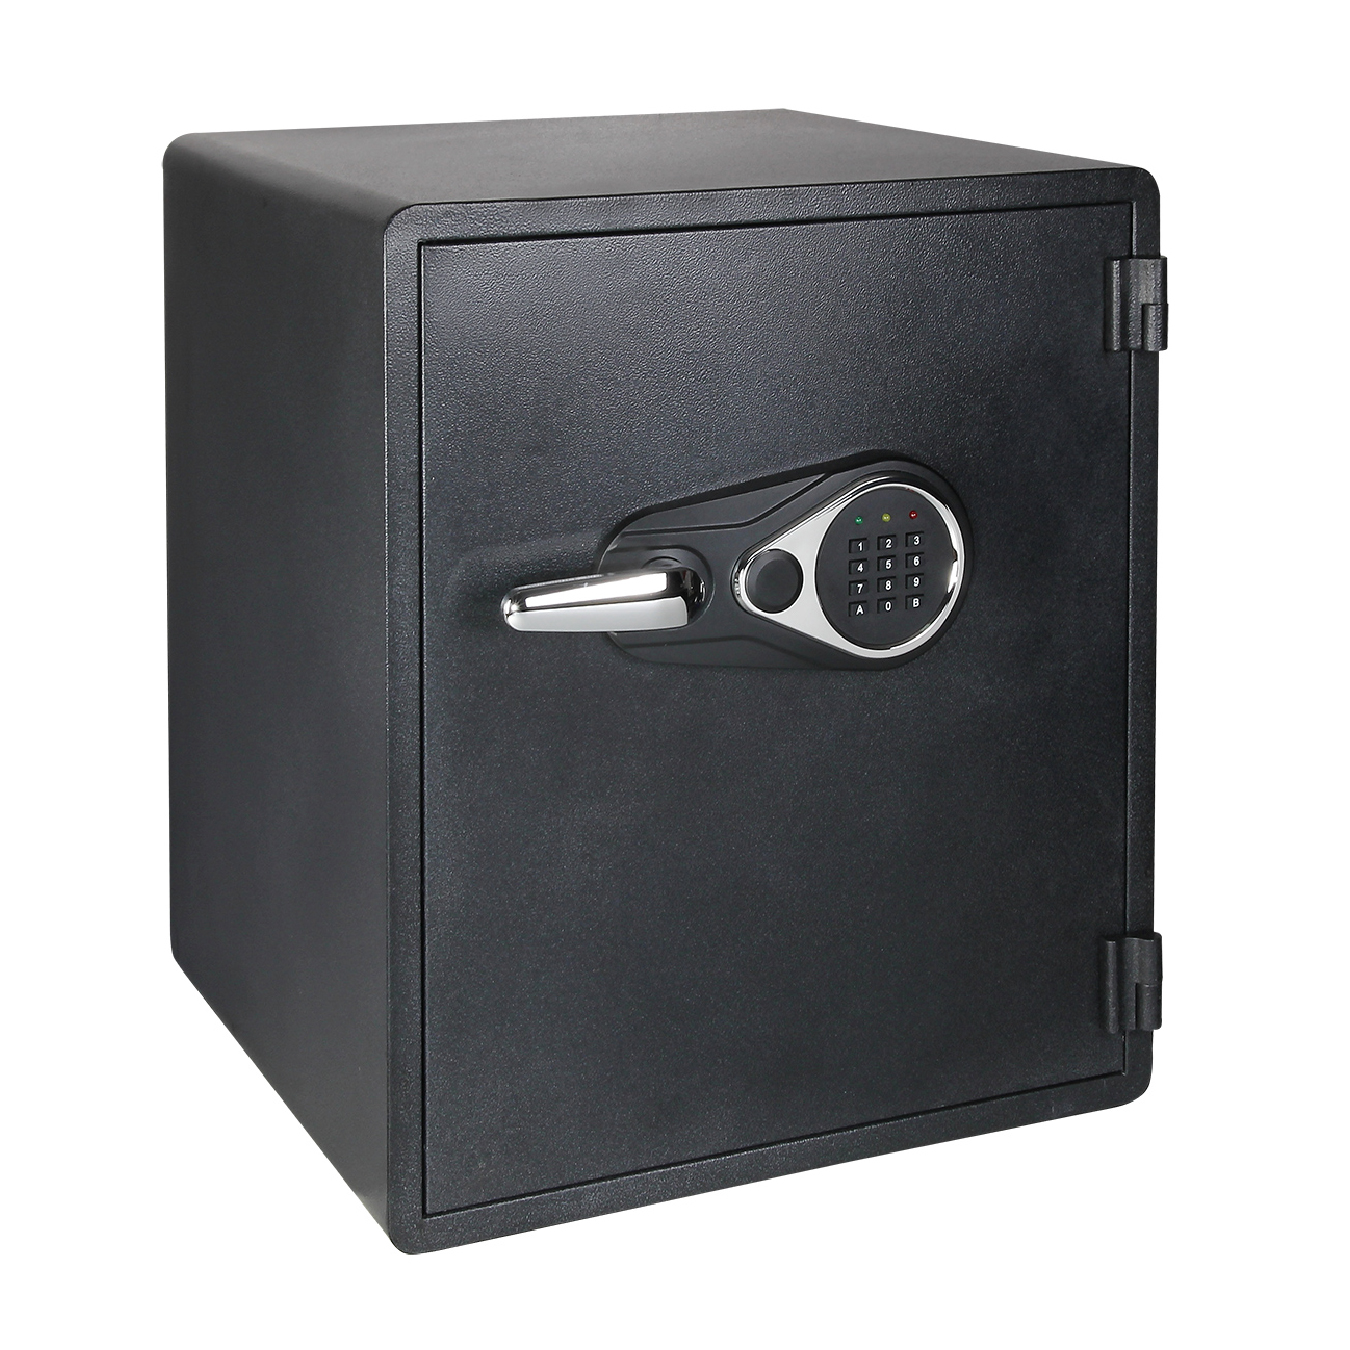 Lock Well Fire Safe, Digital Lock, 1 Removable Shelf, 1 Drawer, Black Color, SWF2420E